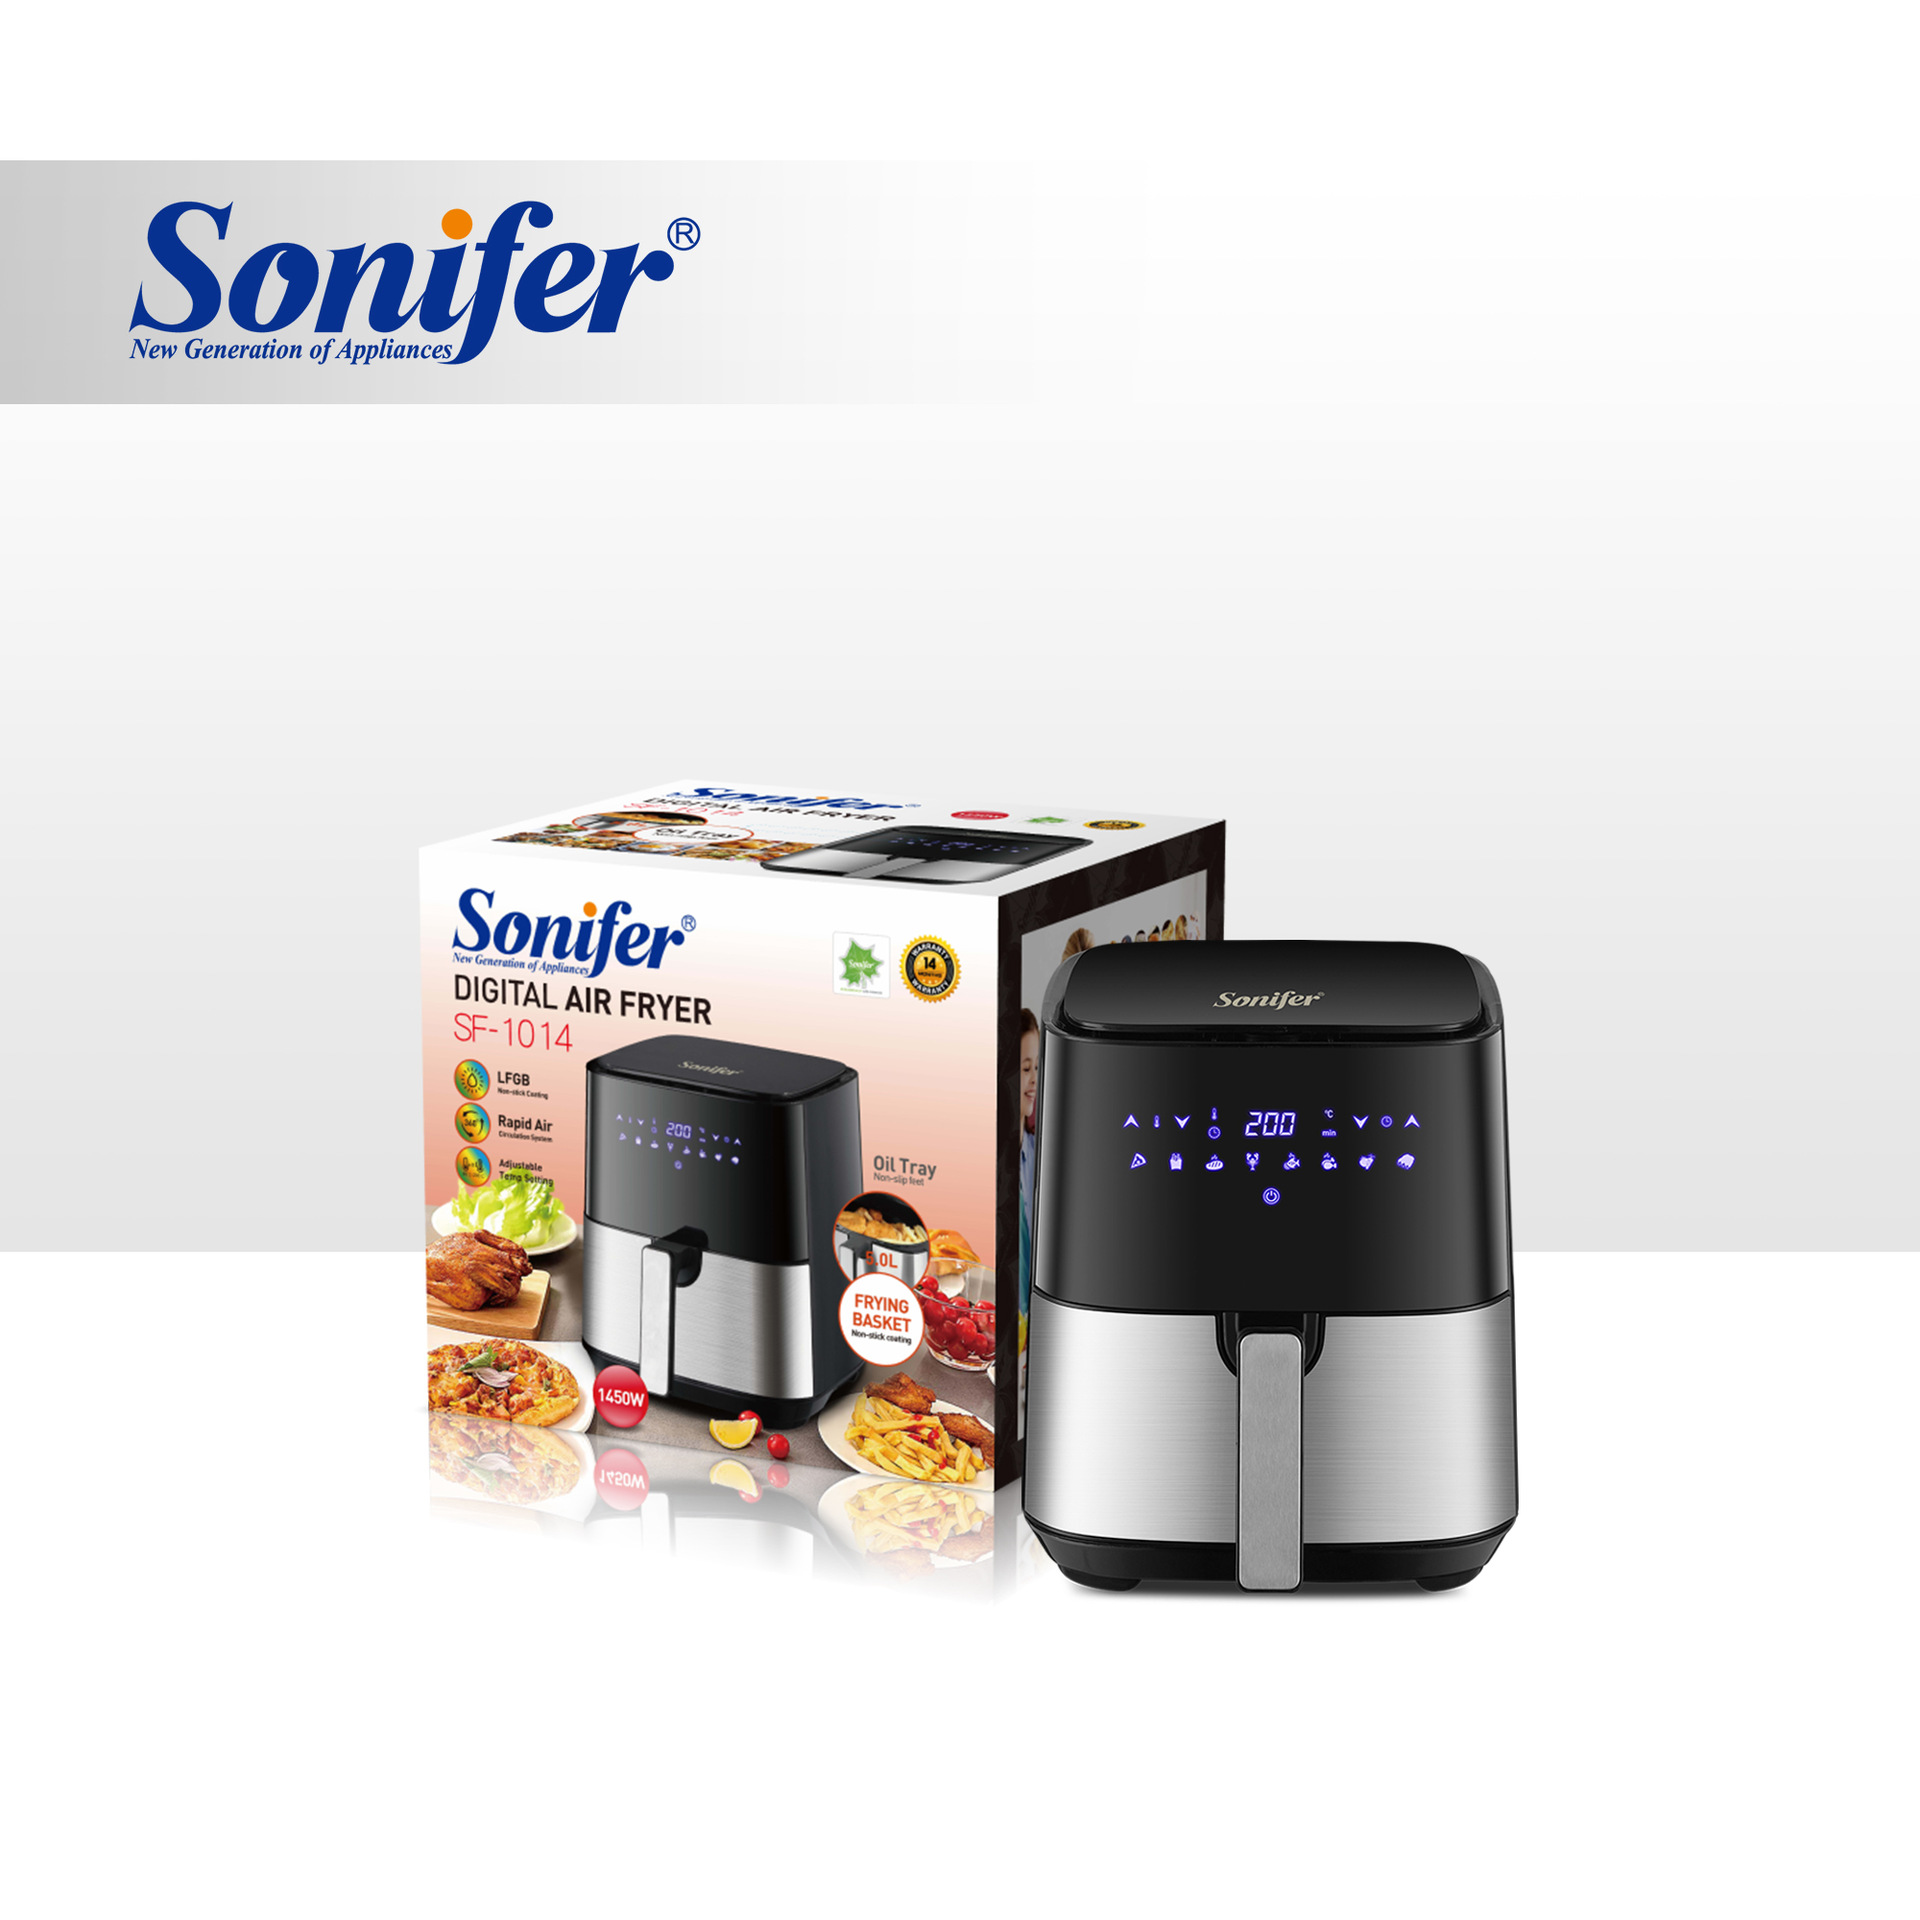 Sonifer 新款空气炸锅5.0L触屏式LED电烤箱 SF-1014